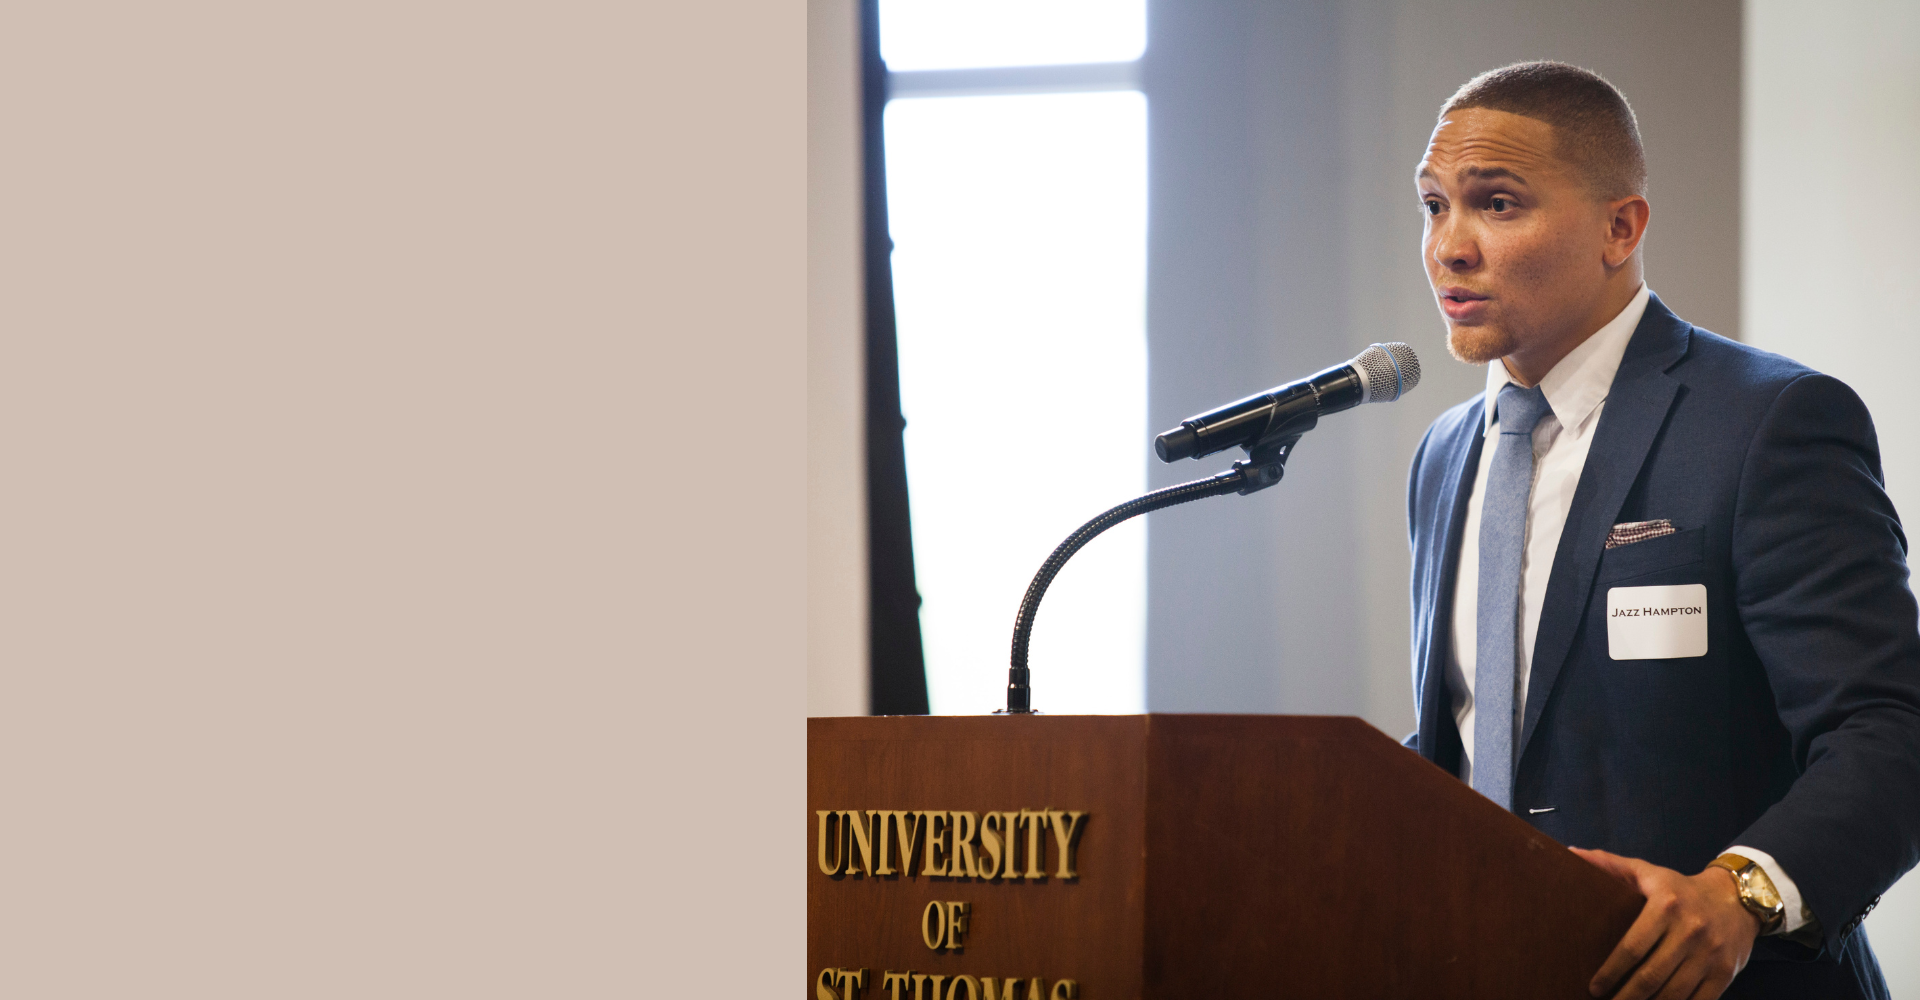 Jazz Hampton speaking at a podium at a University of St. Thomas event